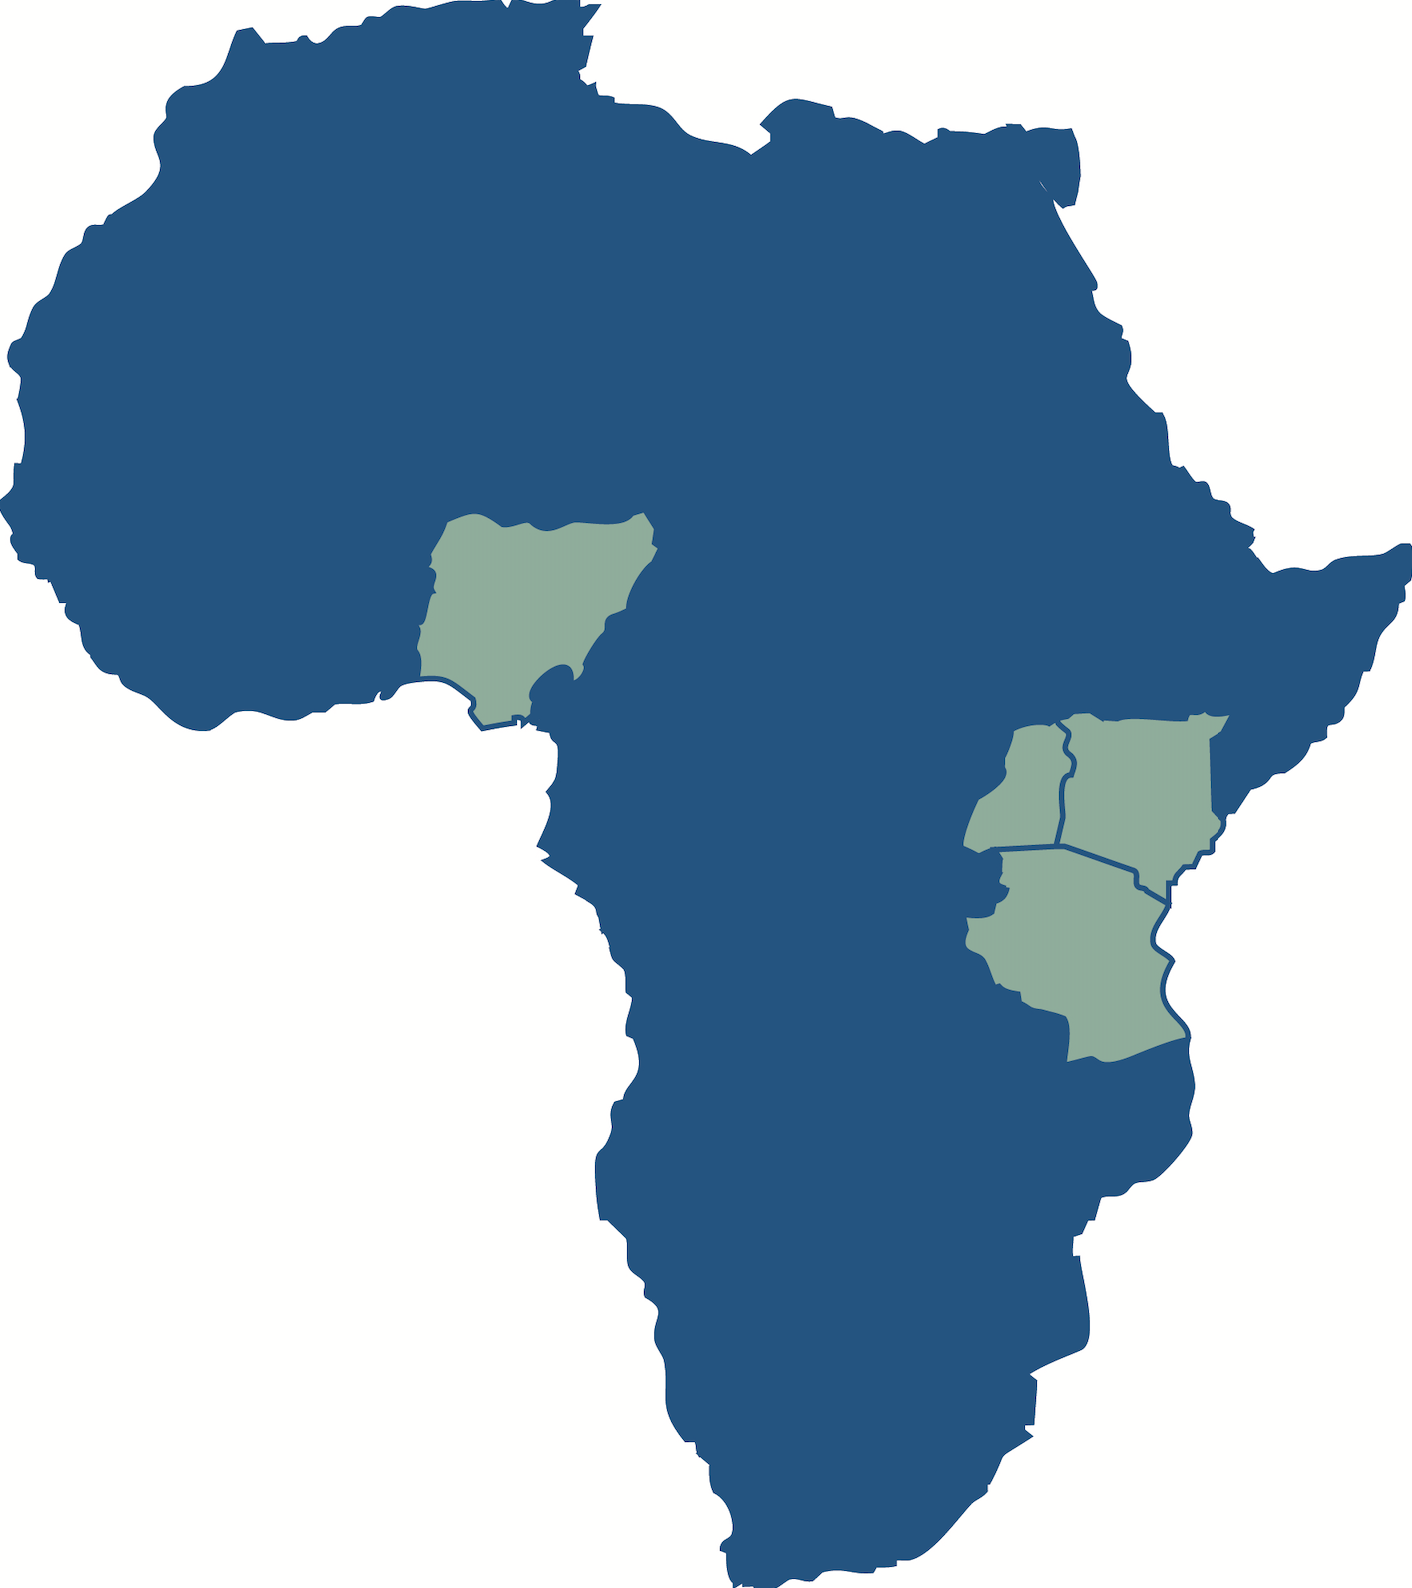 Map of PEPFAR Sites in Africa